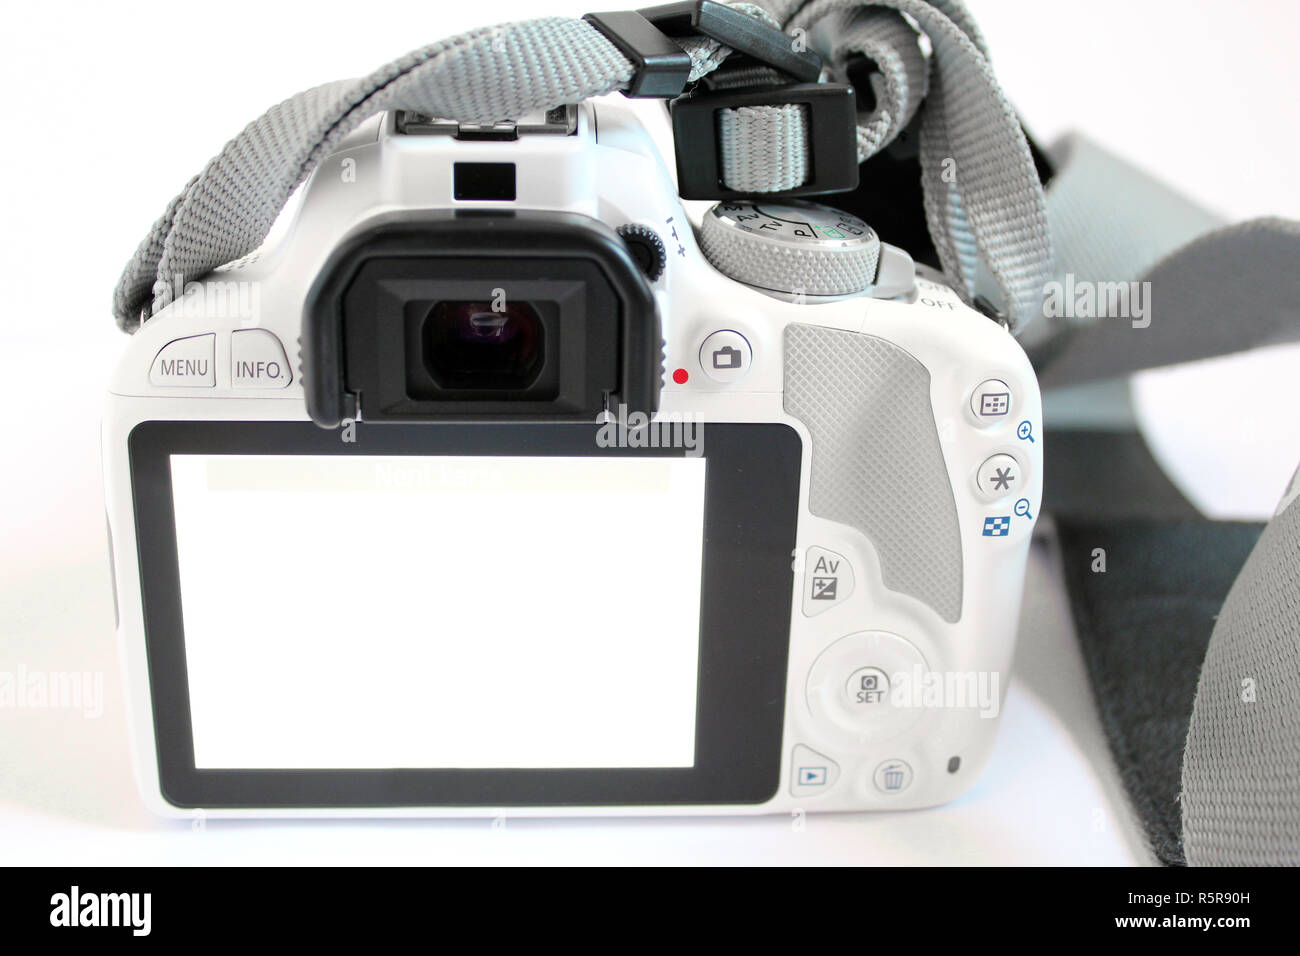 Fotocamera reflex digitale reflex a lente singola bianco Foto Stock